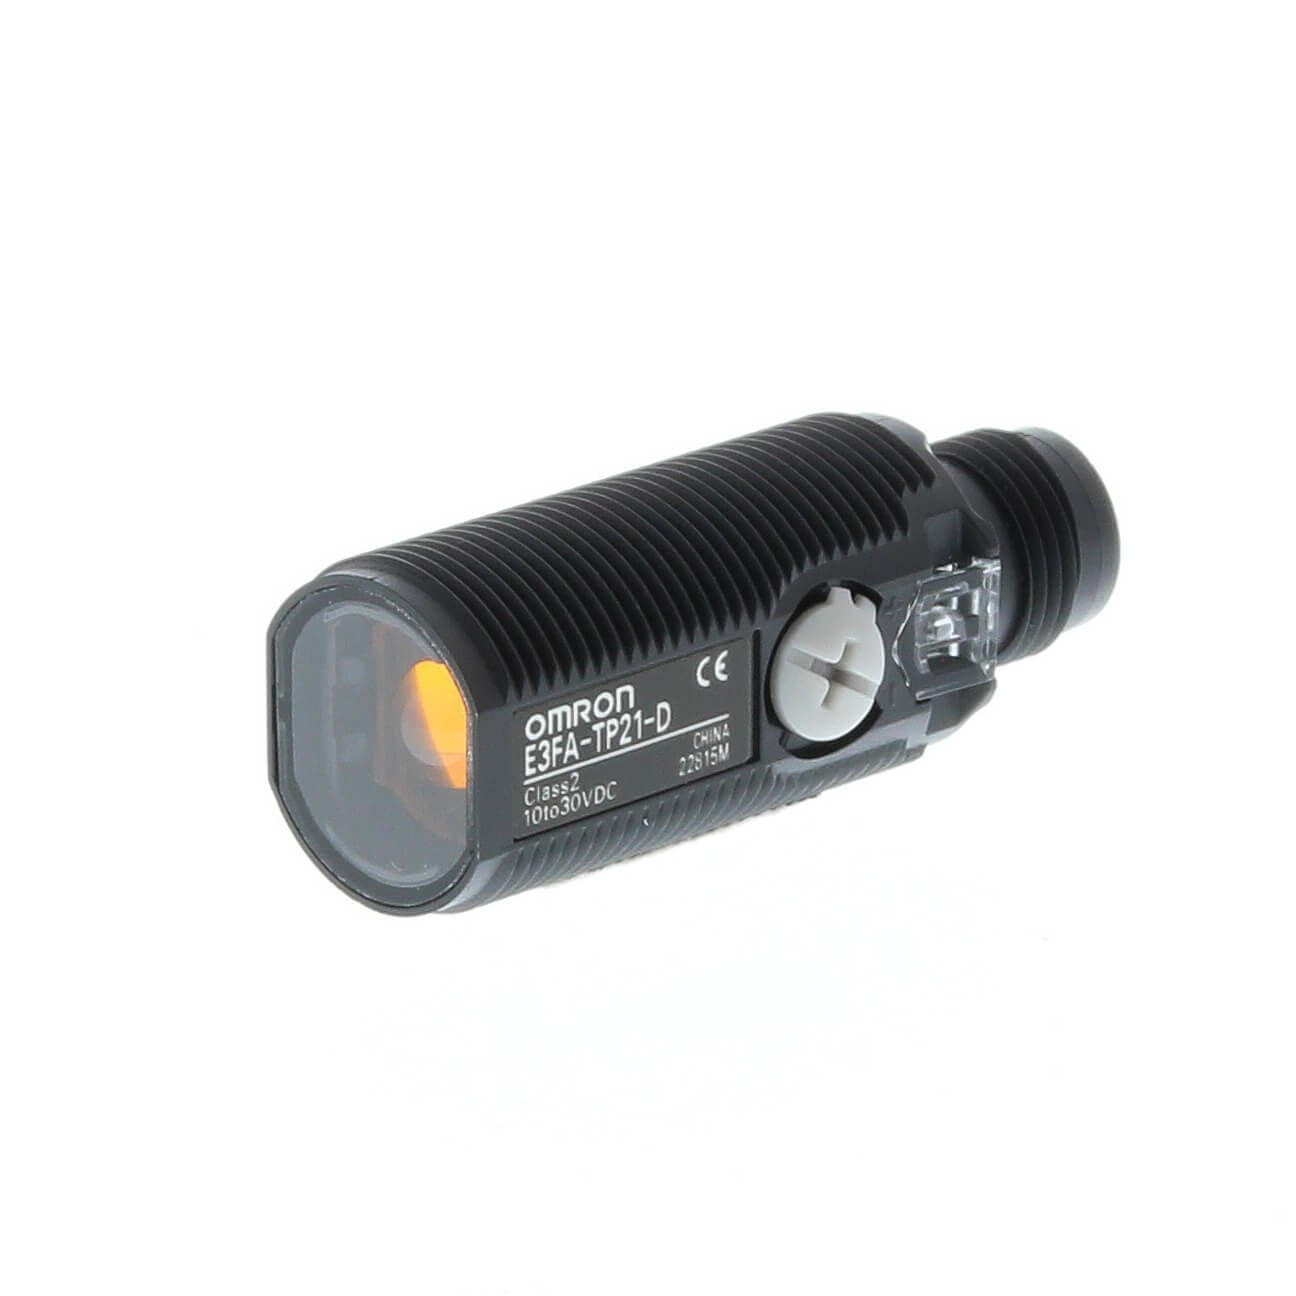 Omron – E3FA-TP21-D Fotoelektrik Sensör, M18 Aksiyel, Plastik Gövde, Kırmızı LED